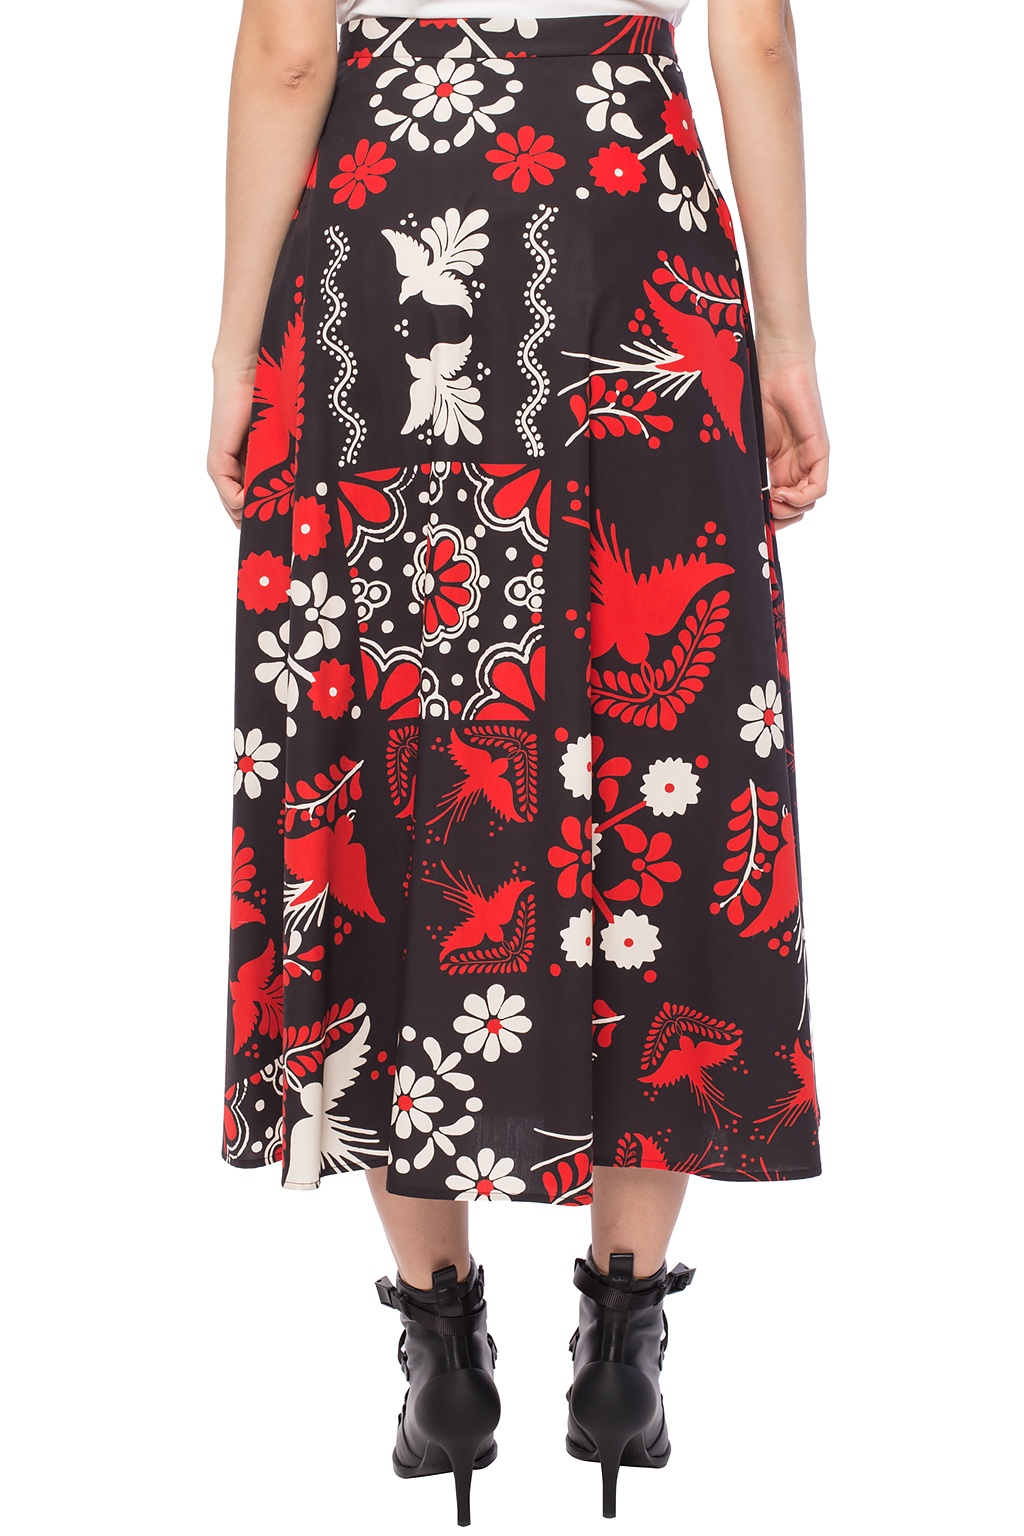 Red Valentino Embroidered skirt Women's Clothing Vitkac